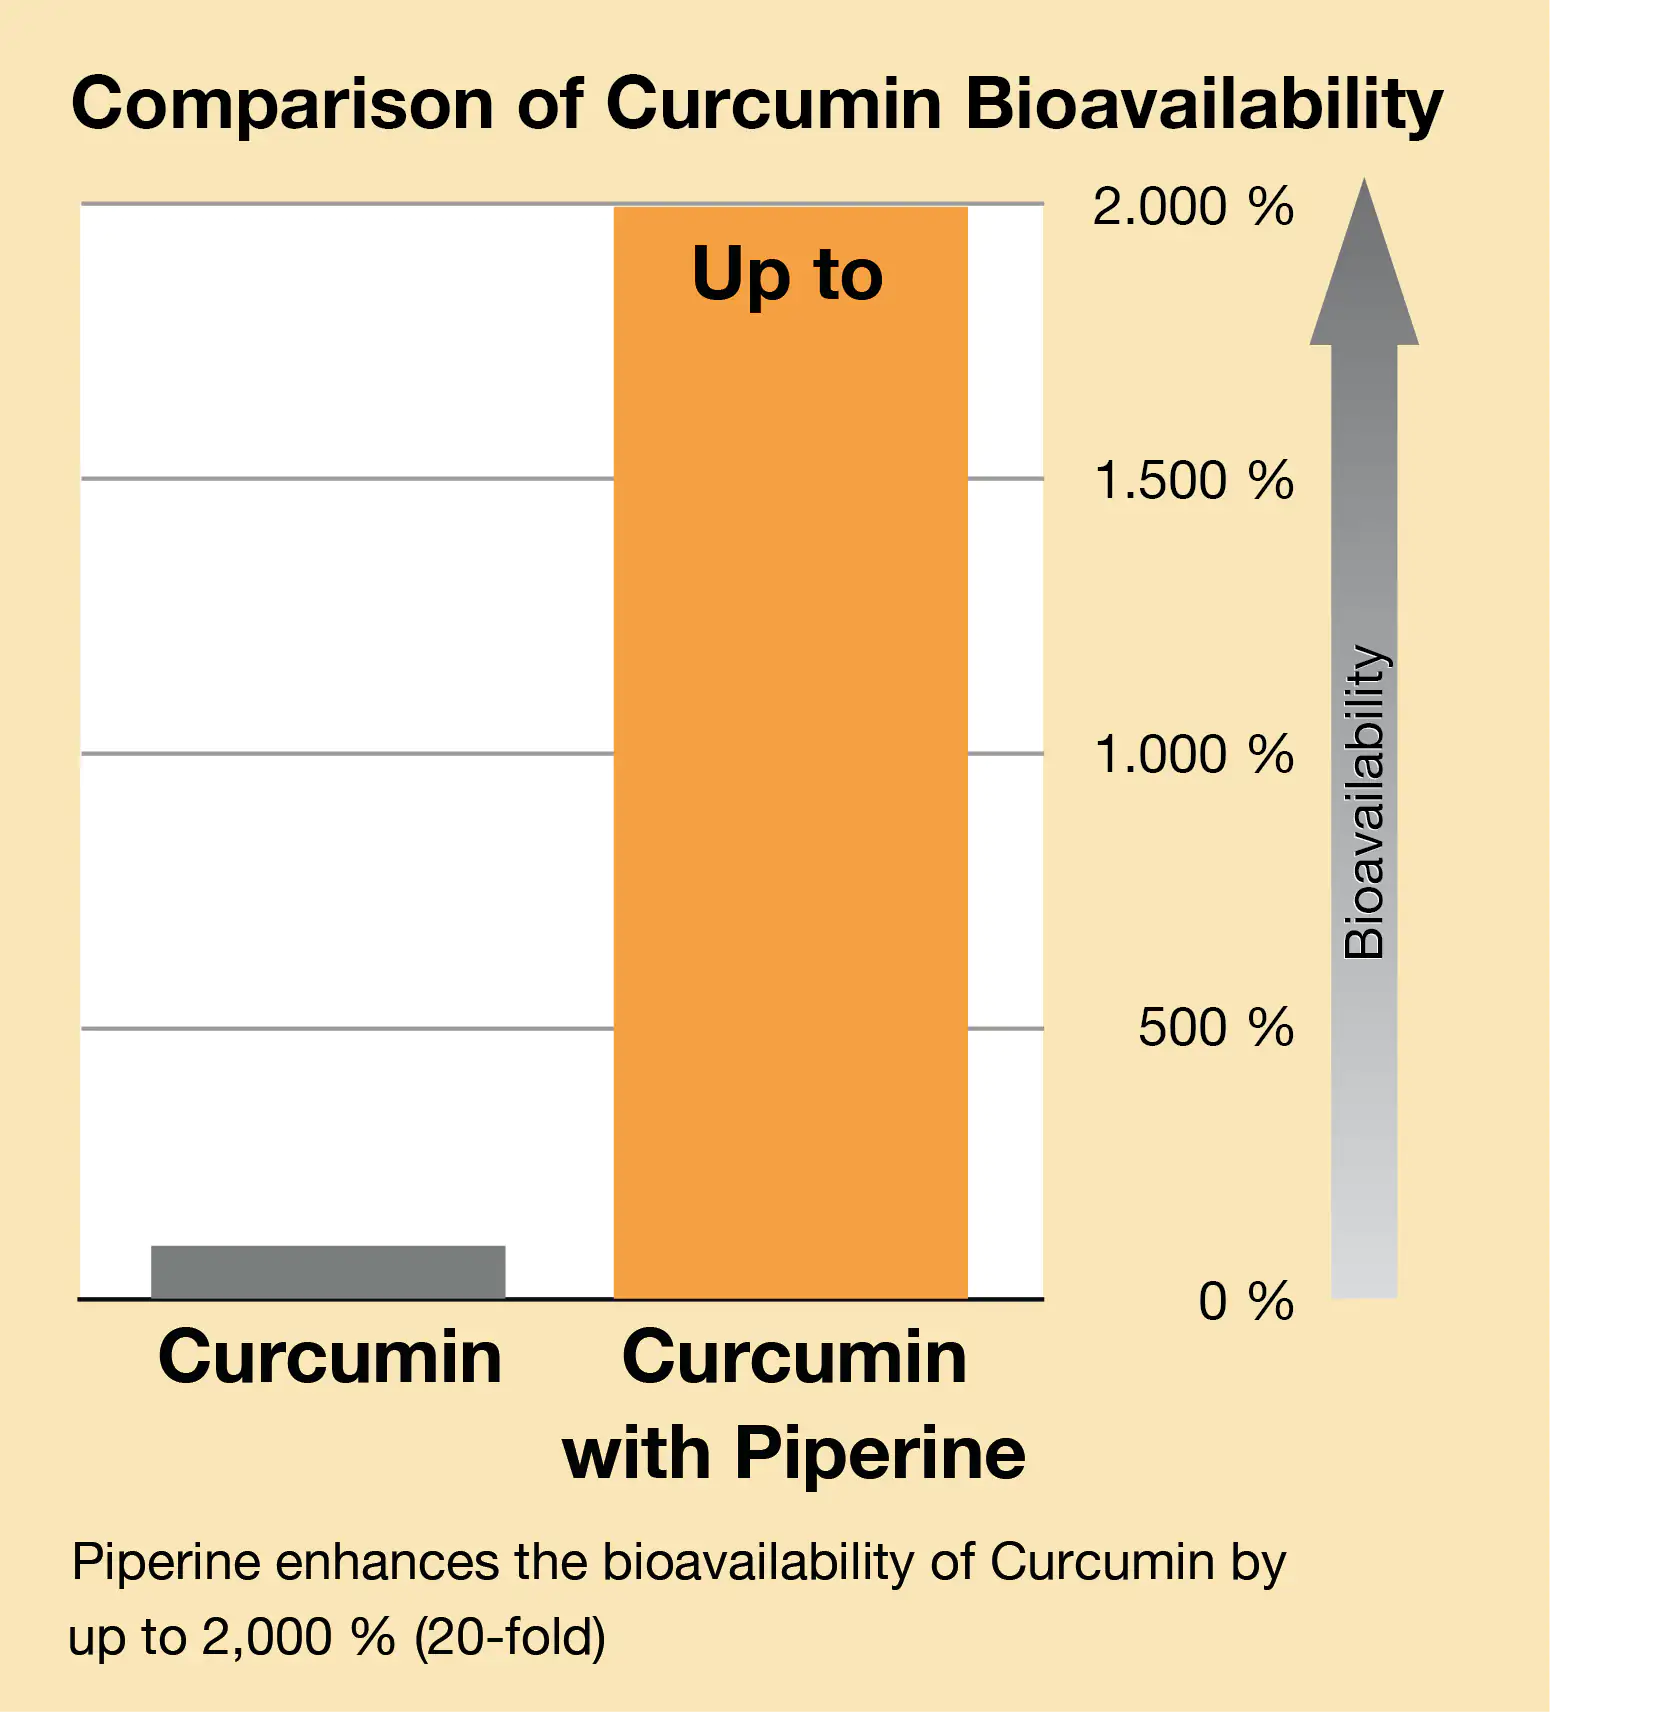 Curcuma Piperine